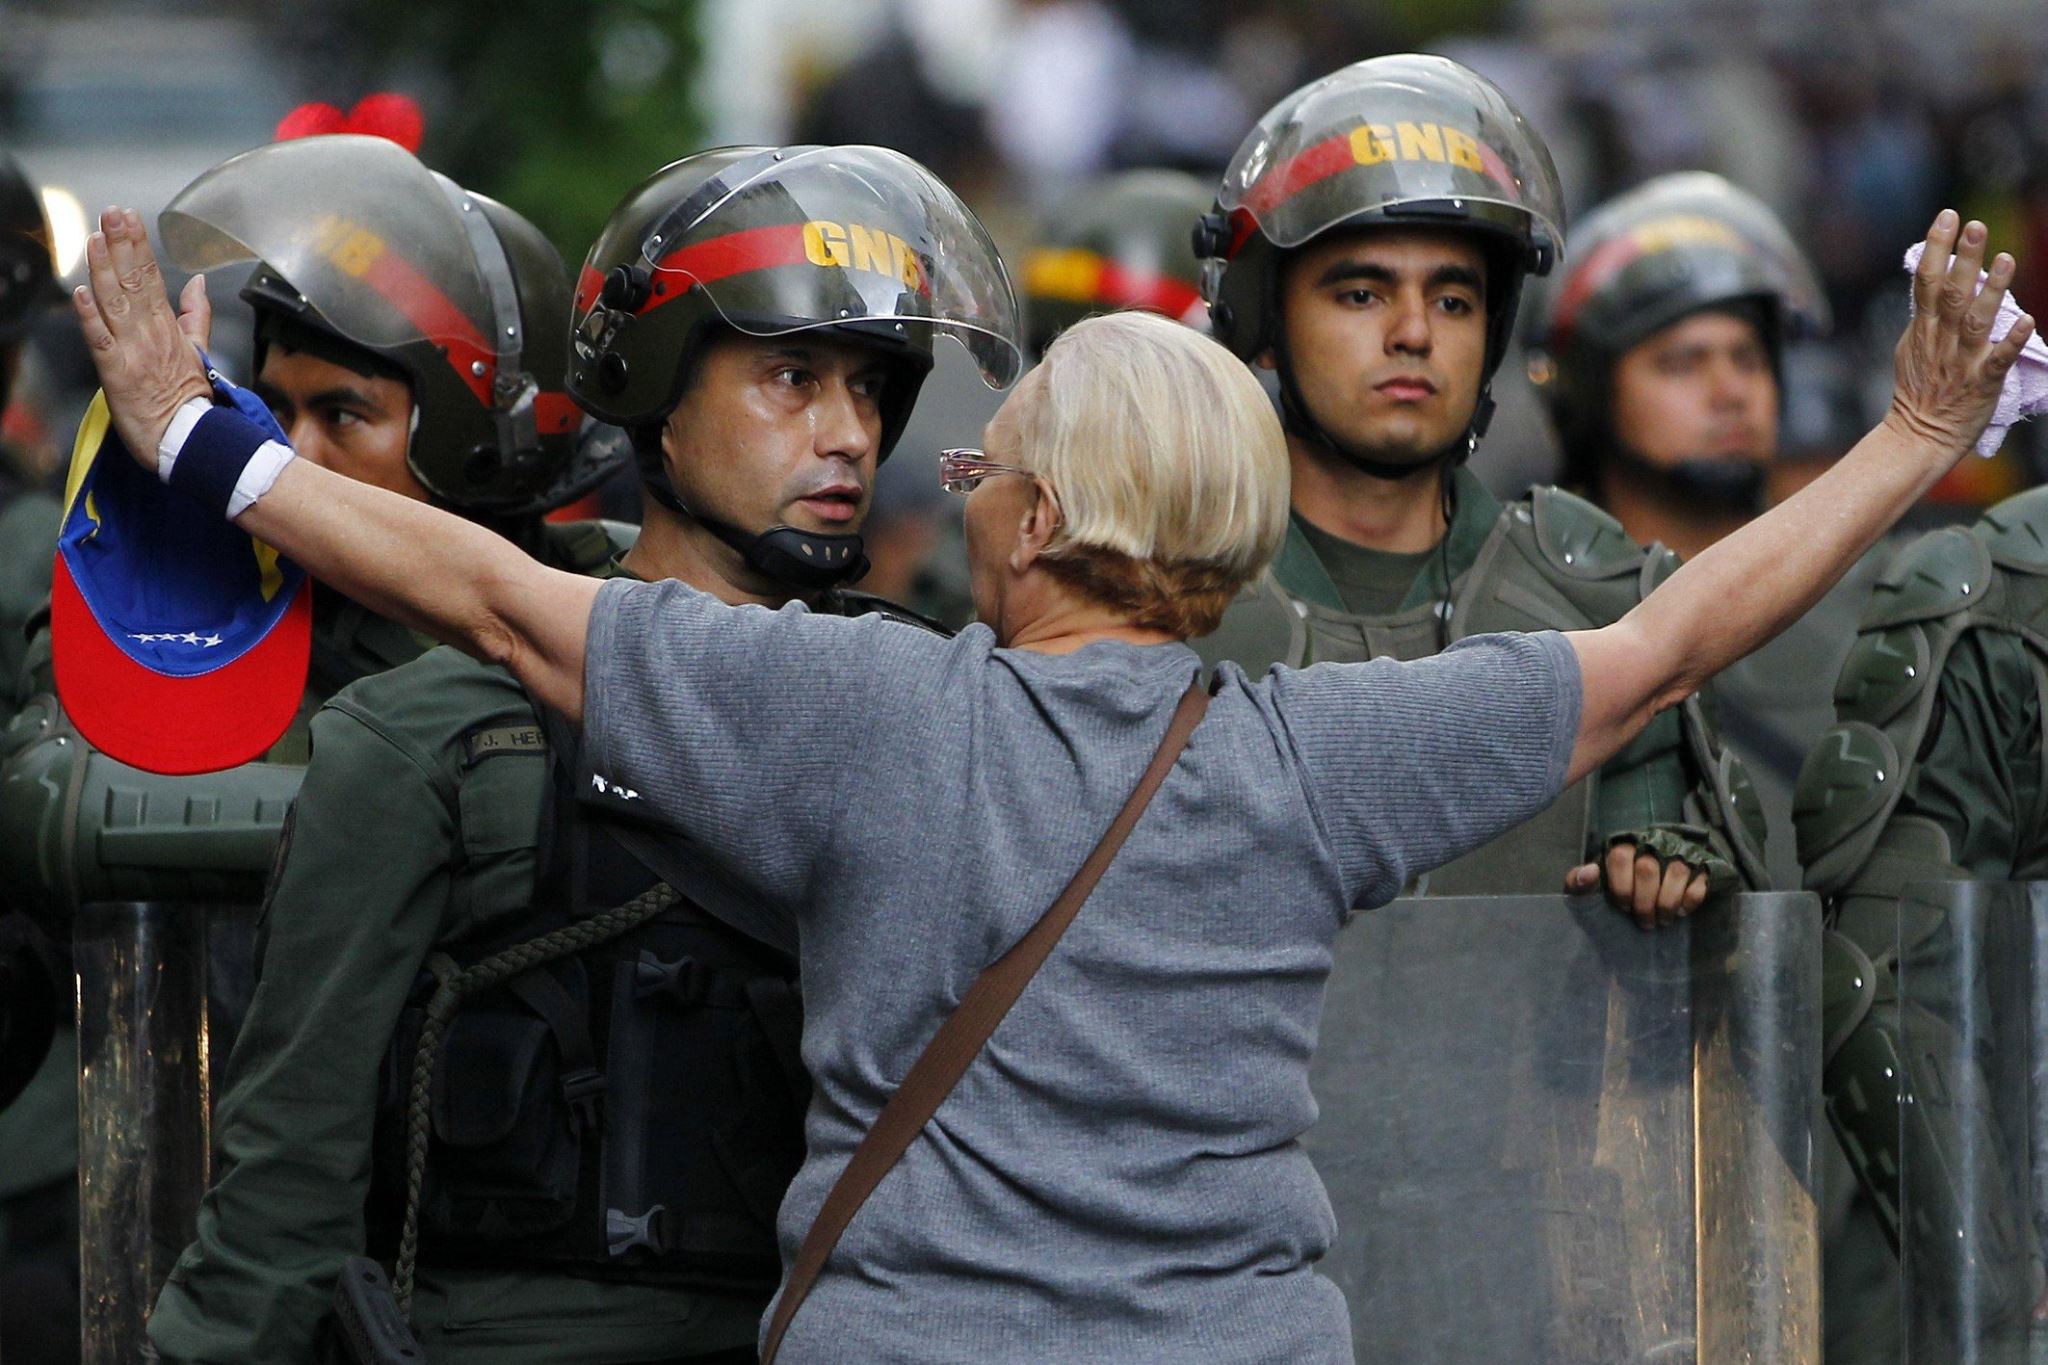 OPINIÃO: as manifestações na Venezuela